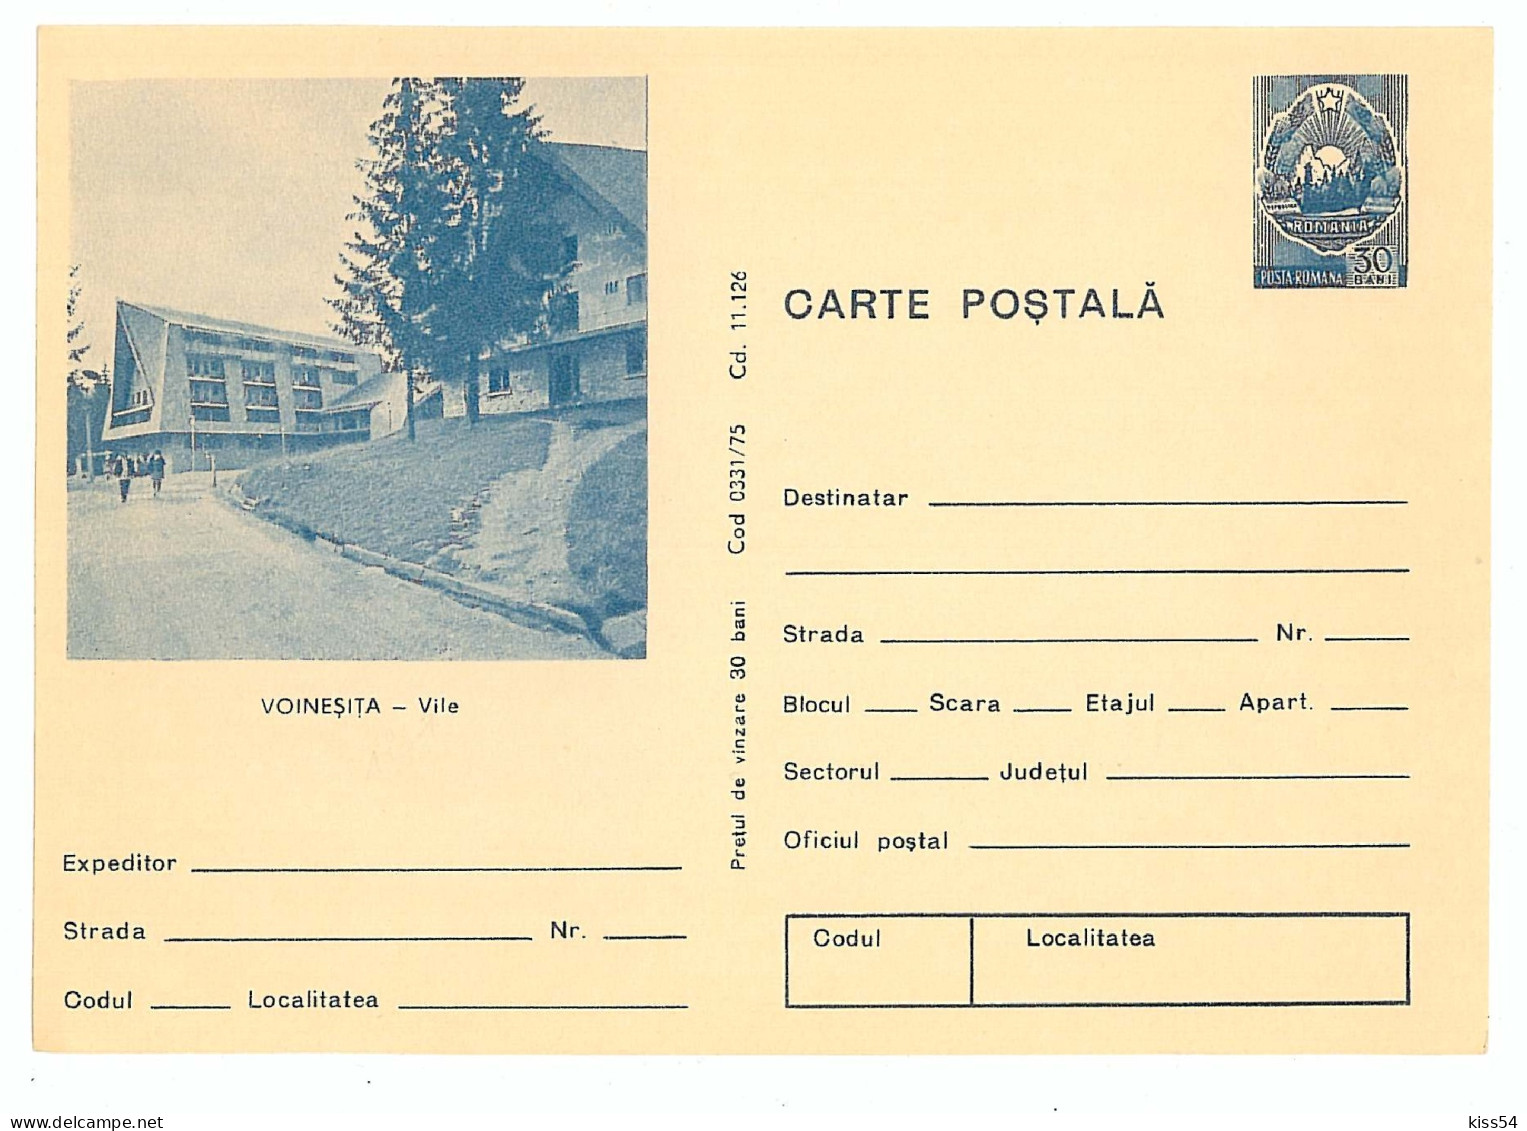 IP 75 - 331 VOINESITA - Stationery - Unused - 1975 - Postal Stationery